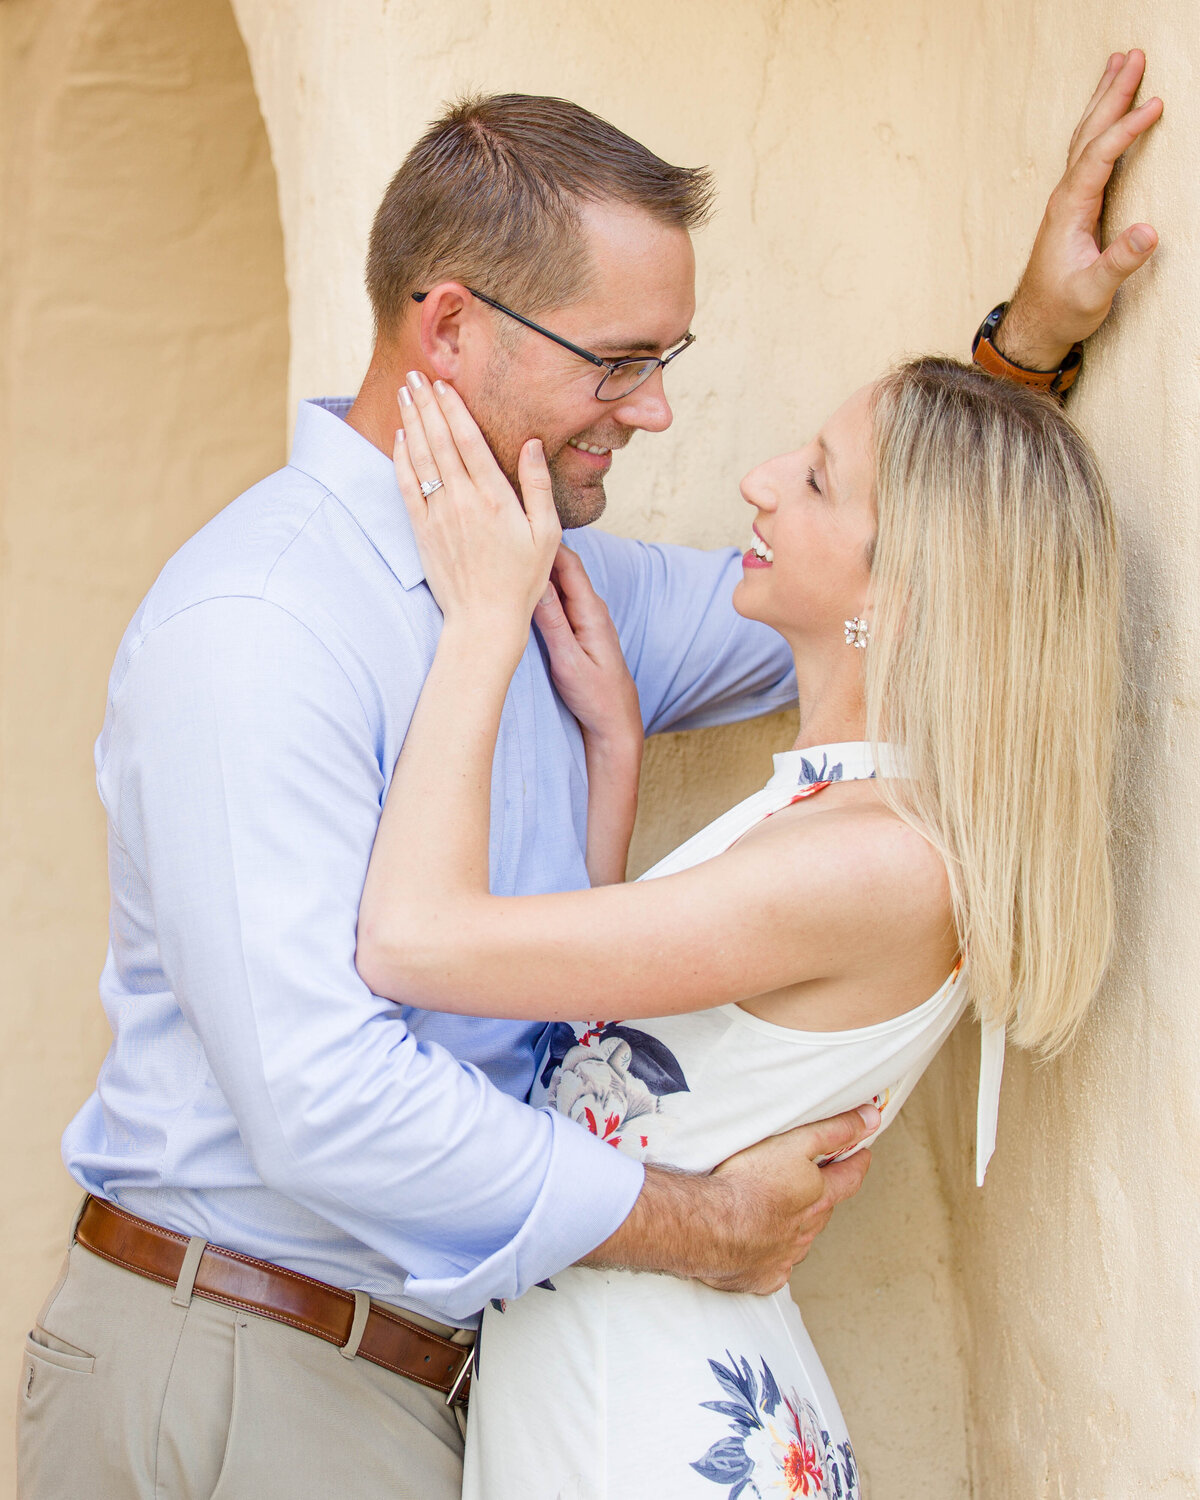 Engagement photo byby Lucas Mason Photography in Orlando, Windermere, Winder Garden area